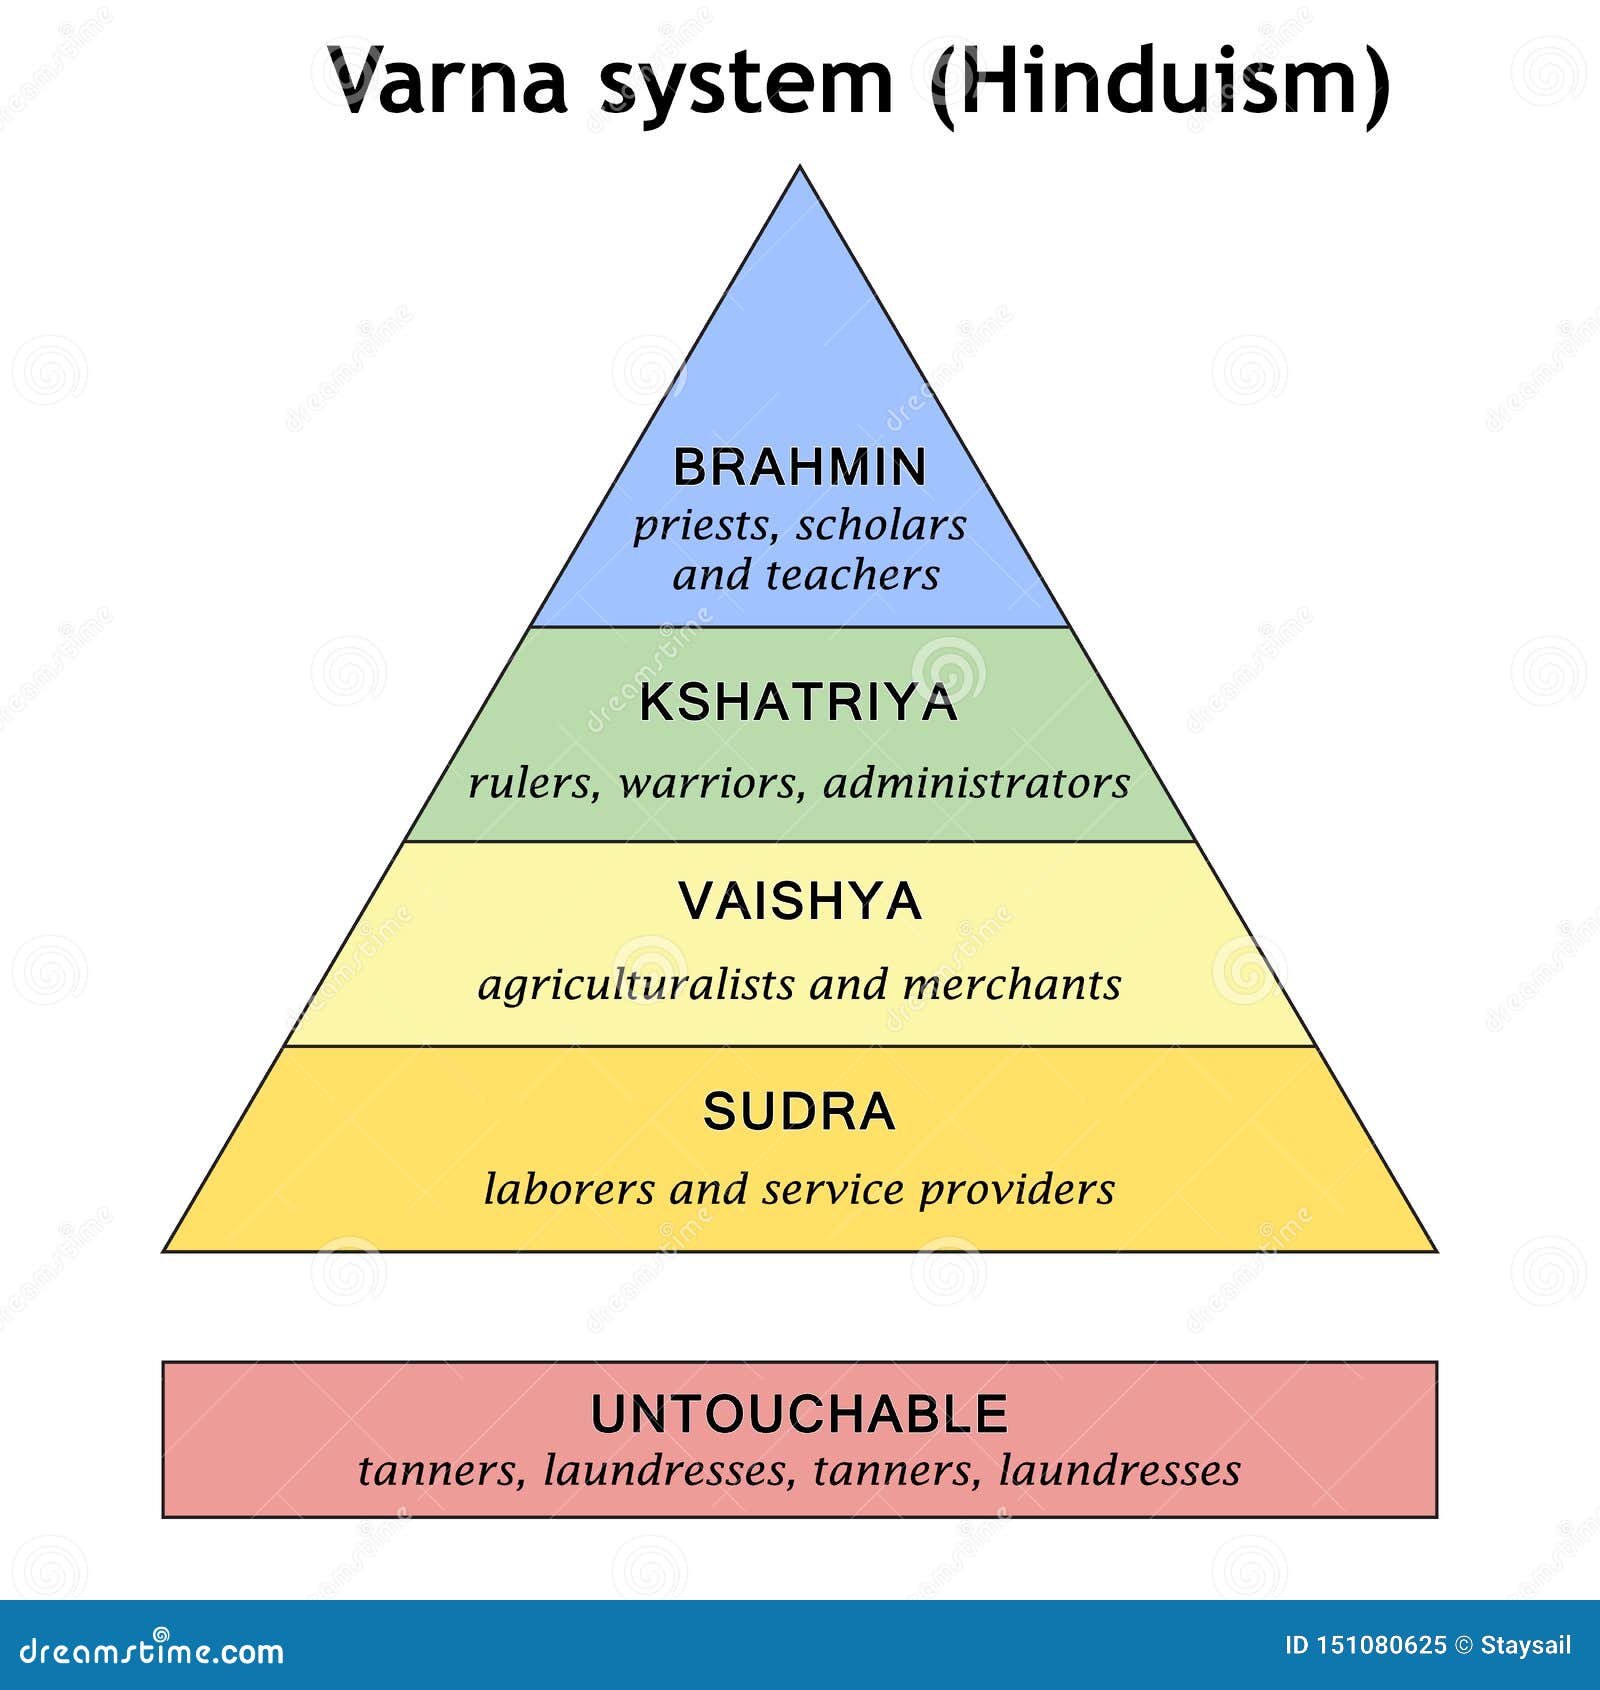 scheme-historical-division-society-varna